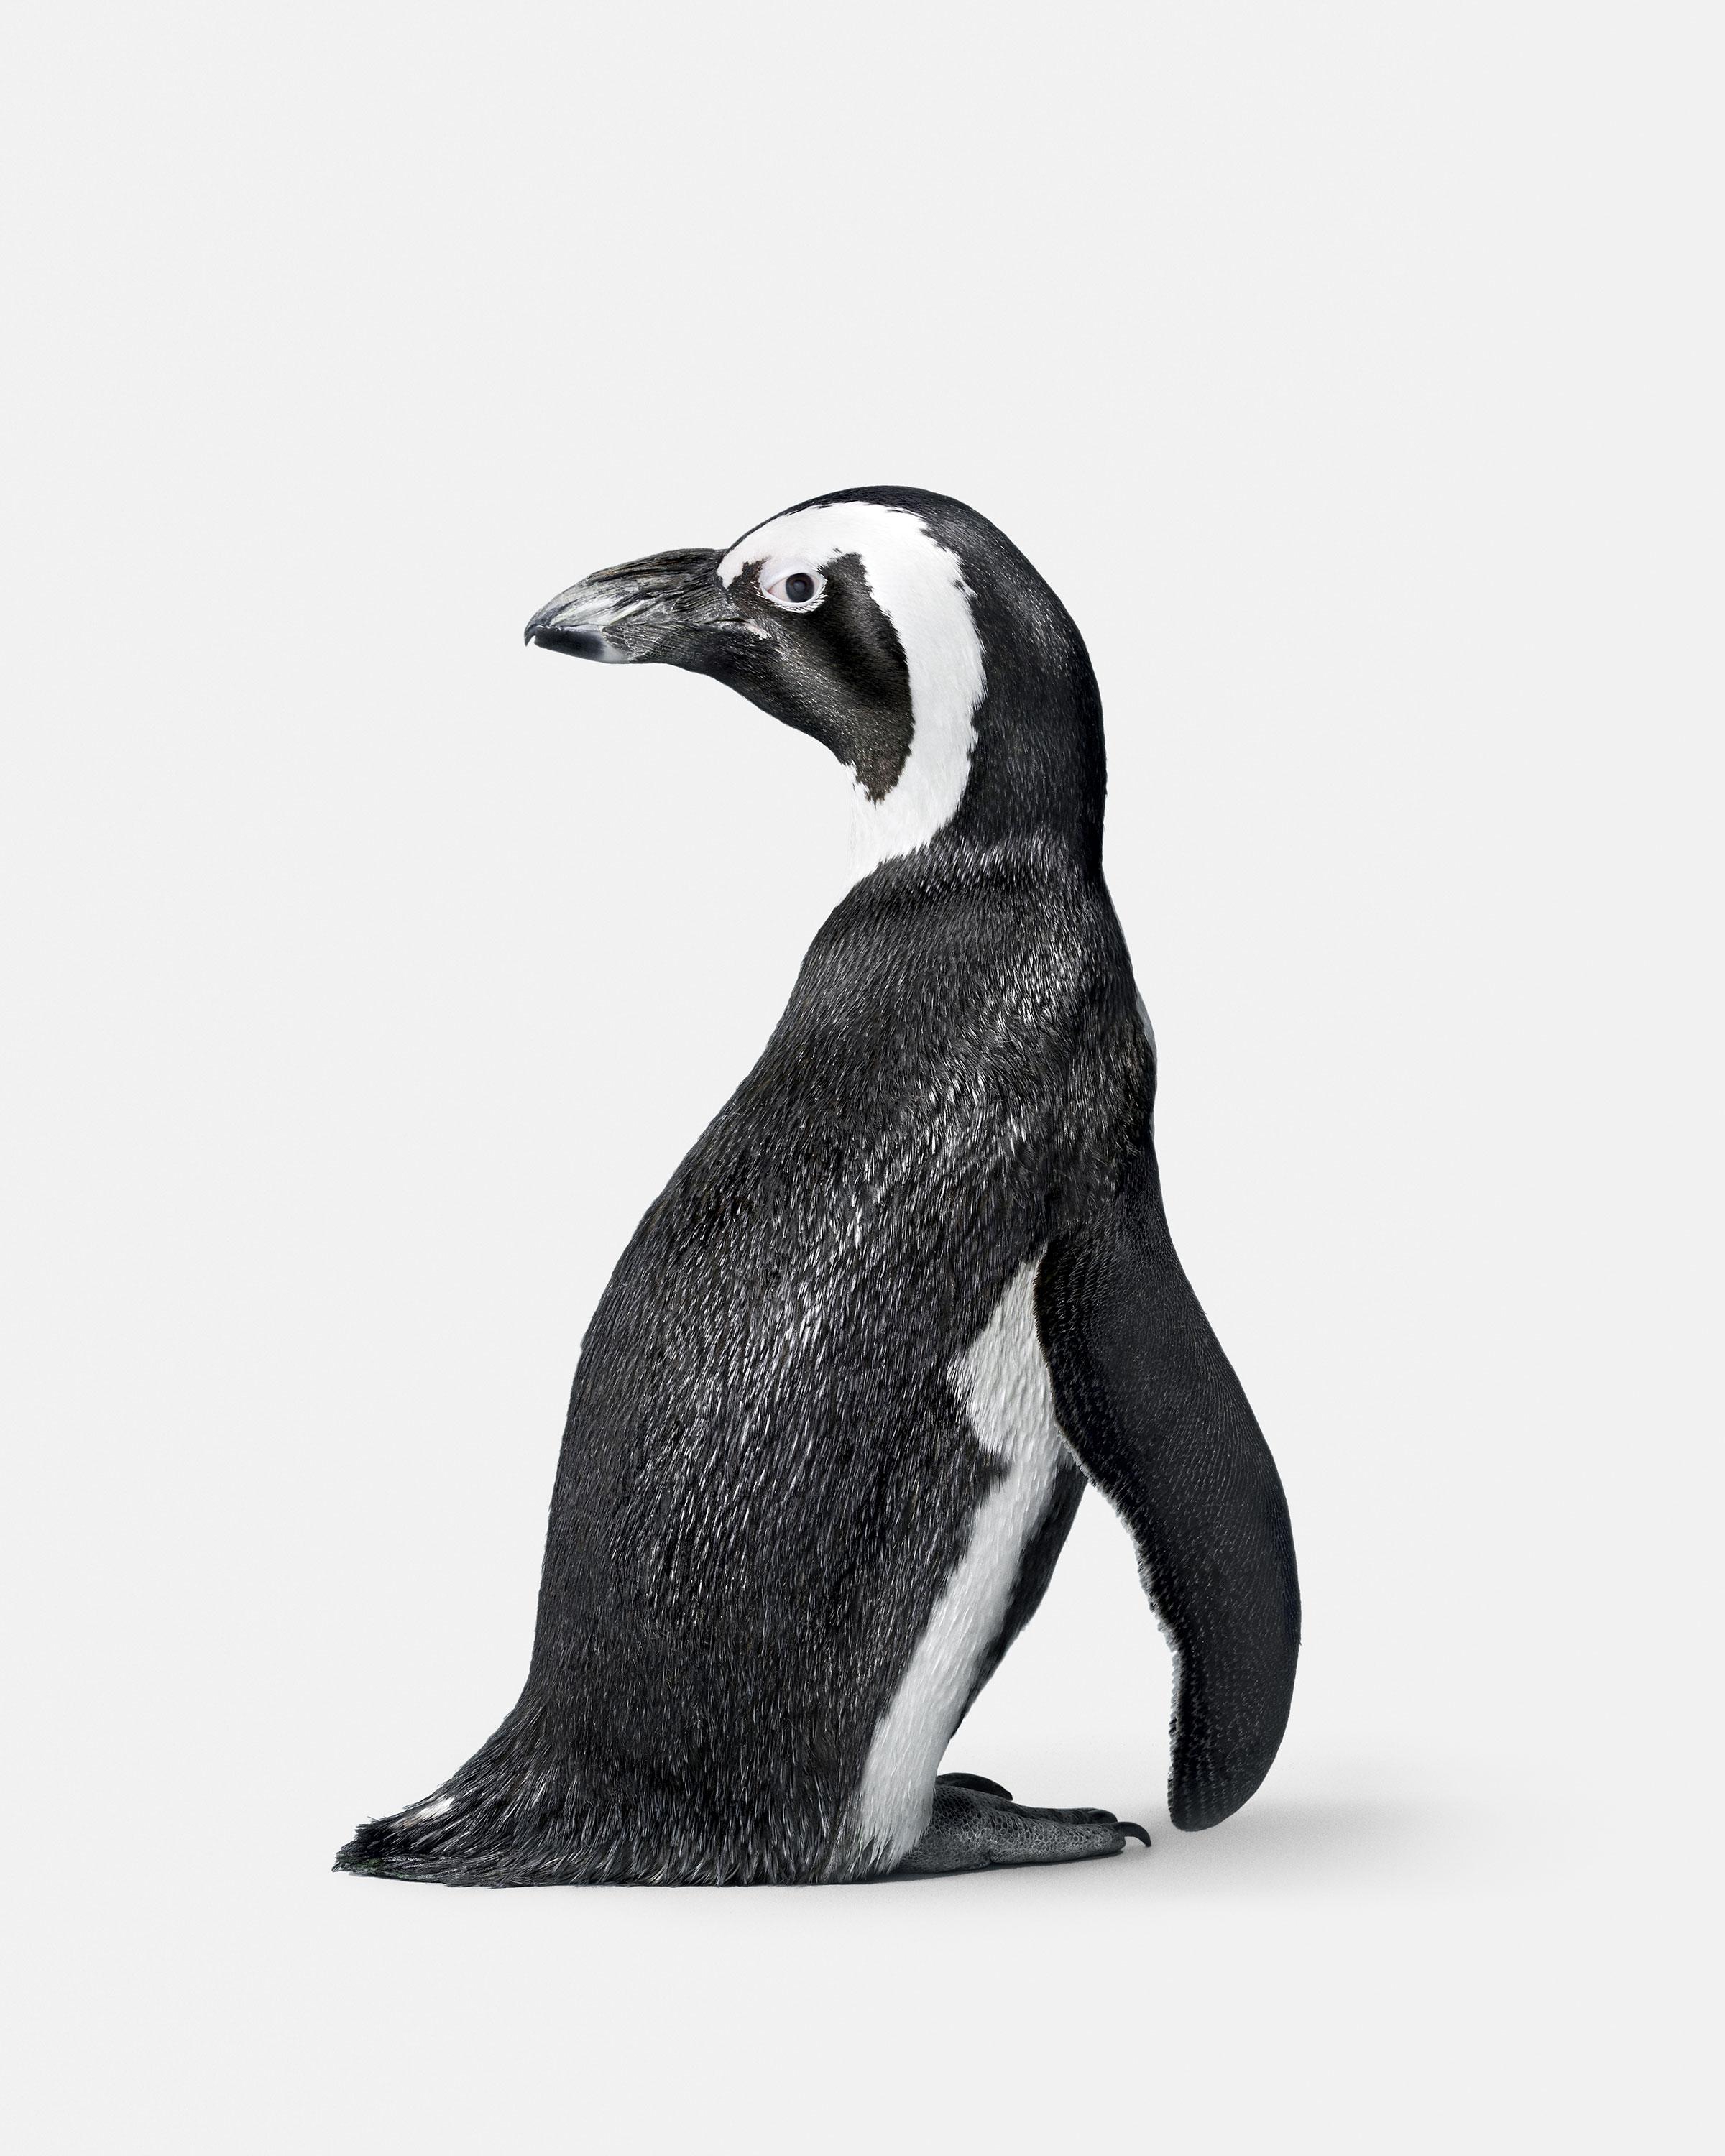 Randal Ford Animal Print - Penguin No. 2 (50" x 40")